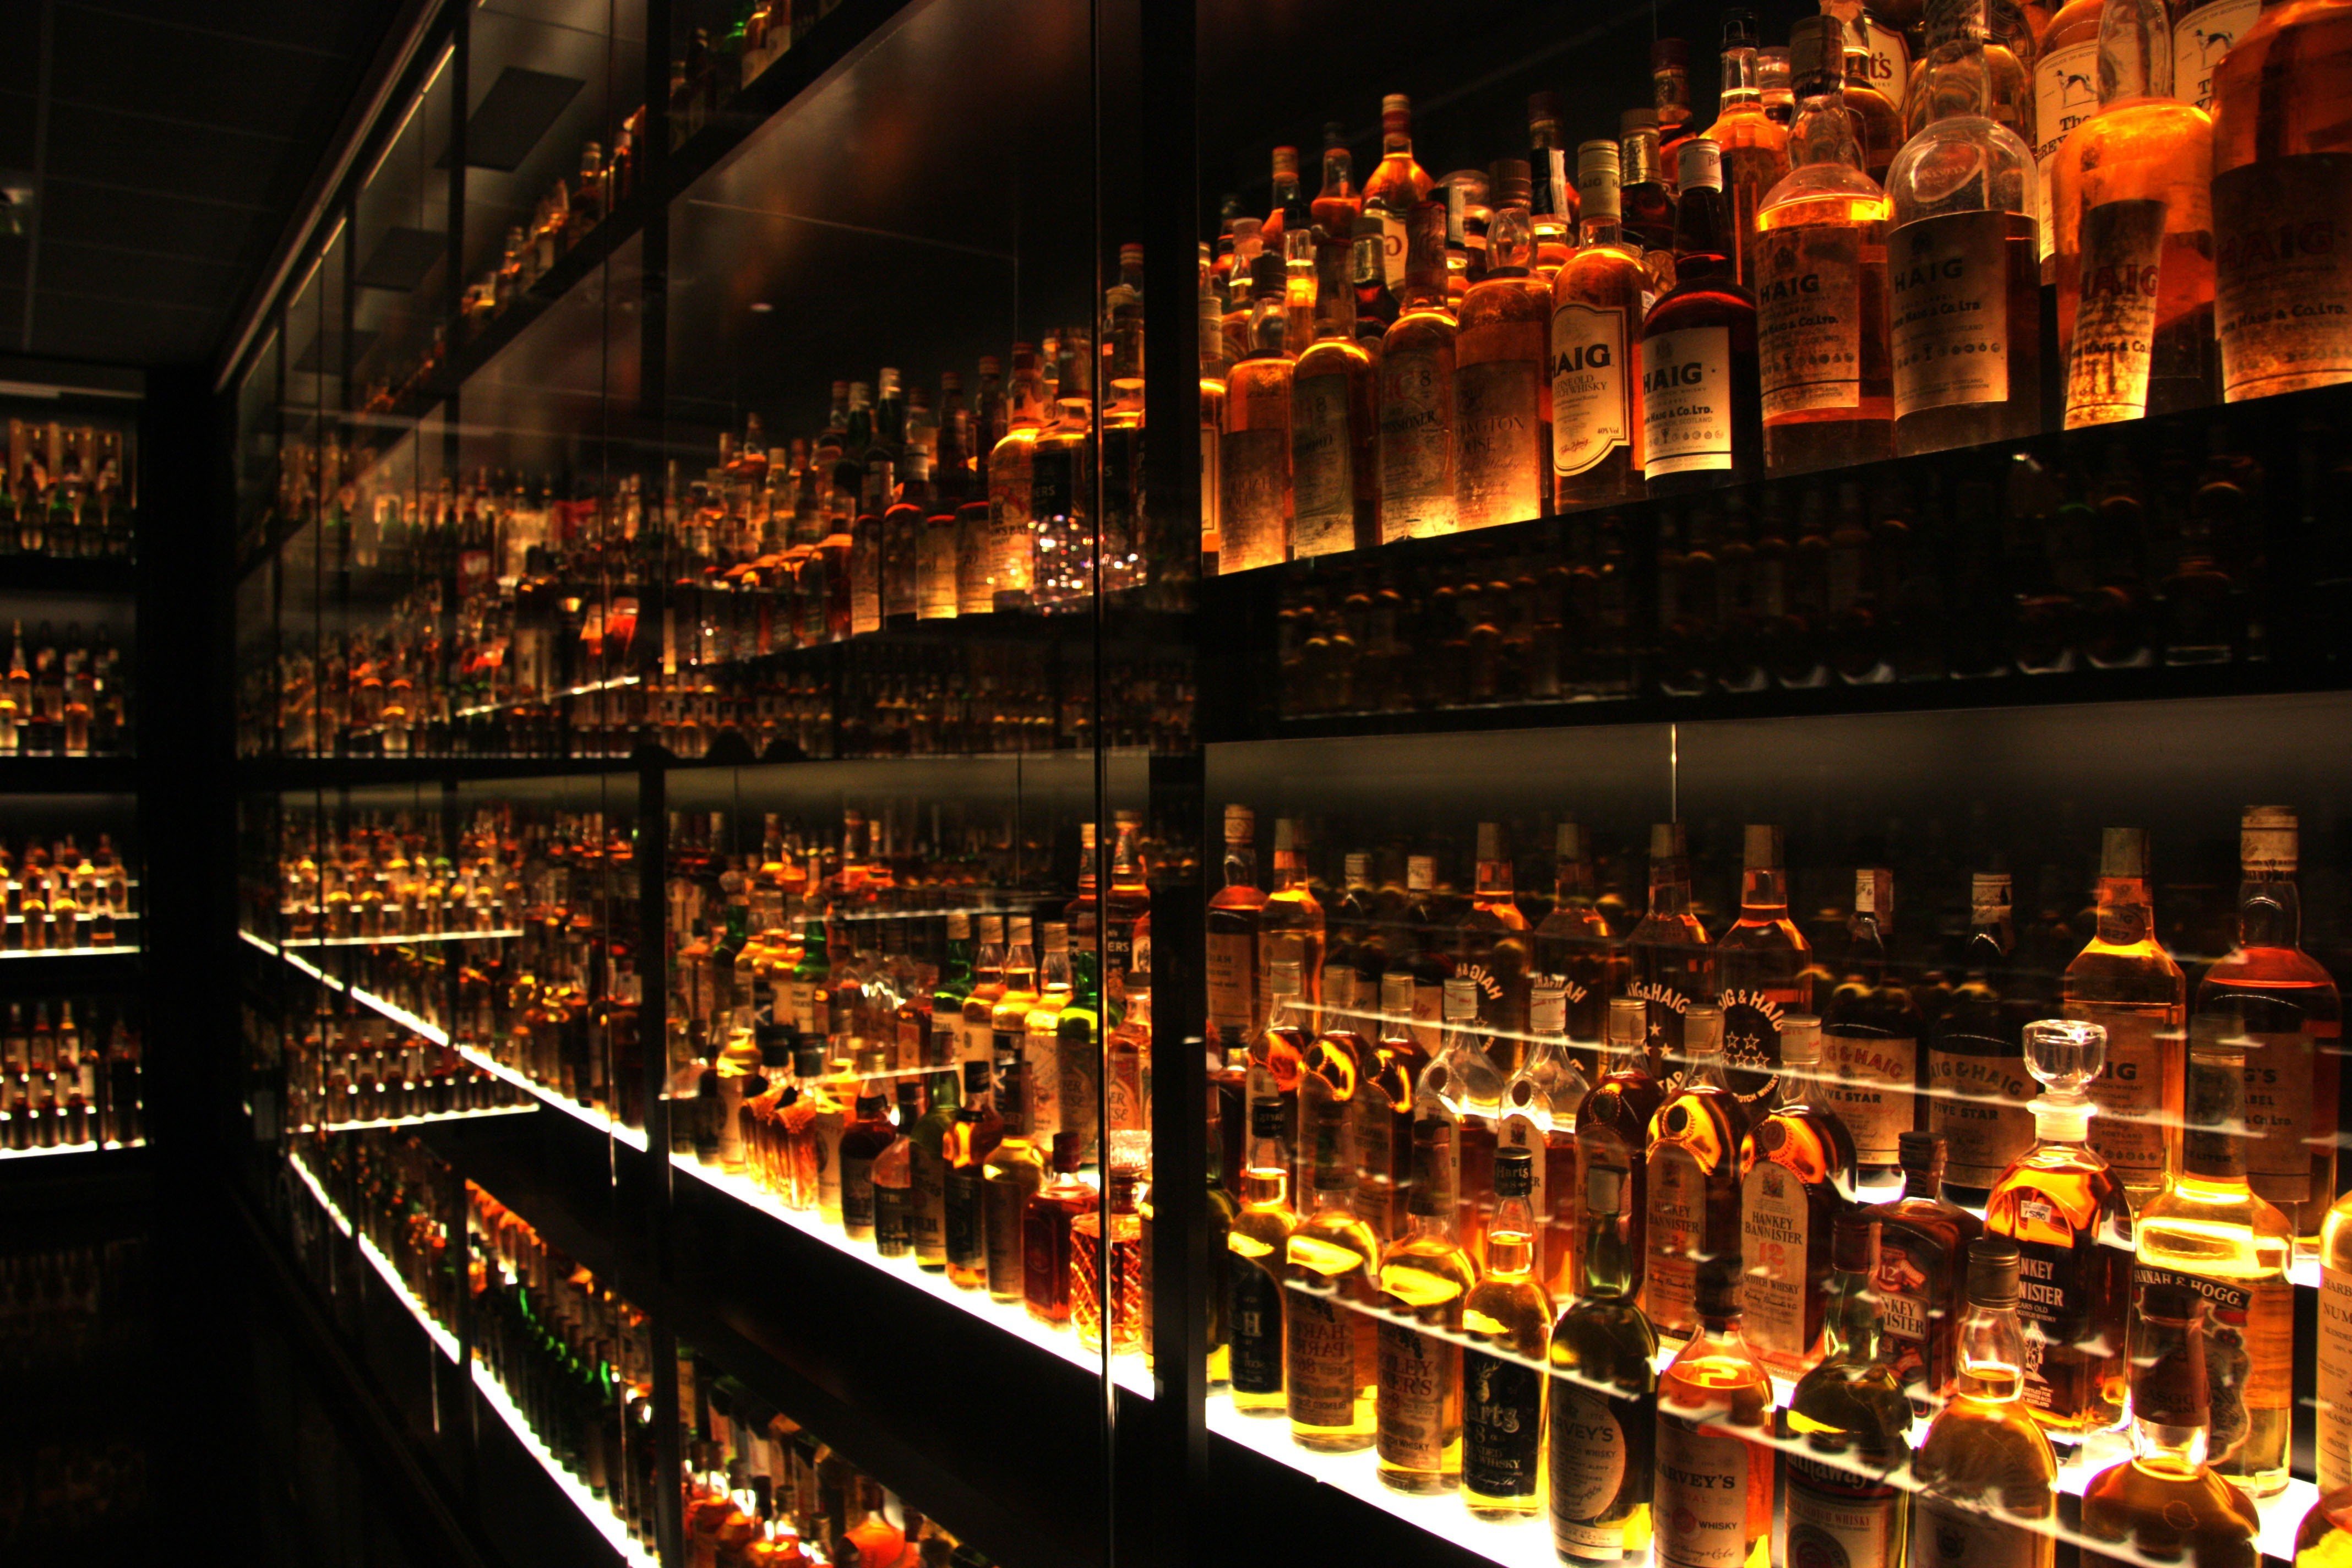 Scotch, Bottles, Shelves, Alcohol Wallpaper